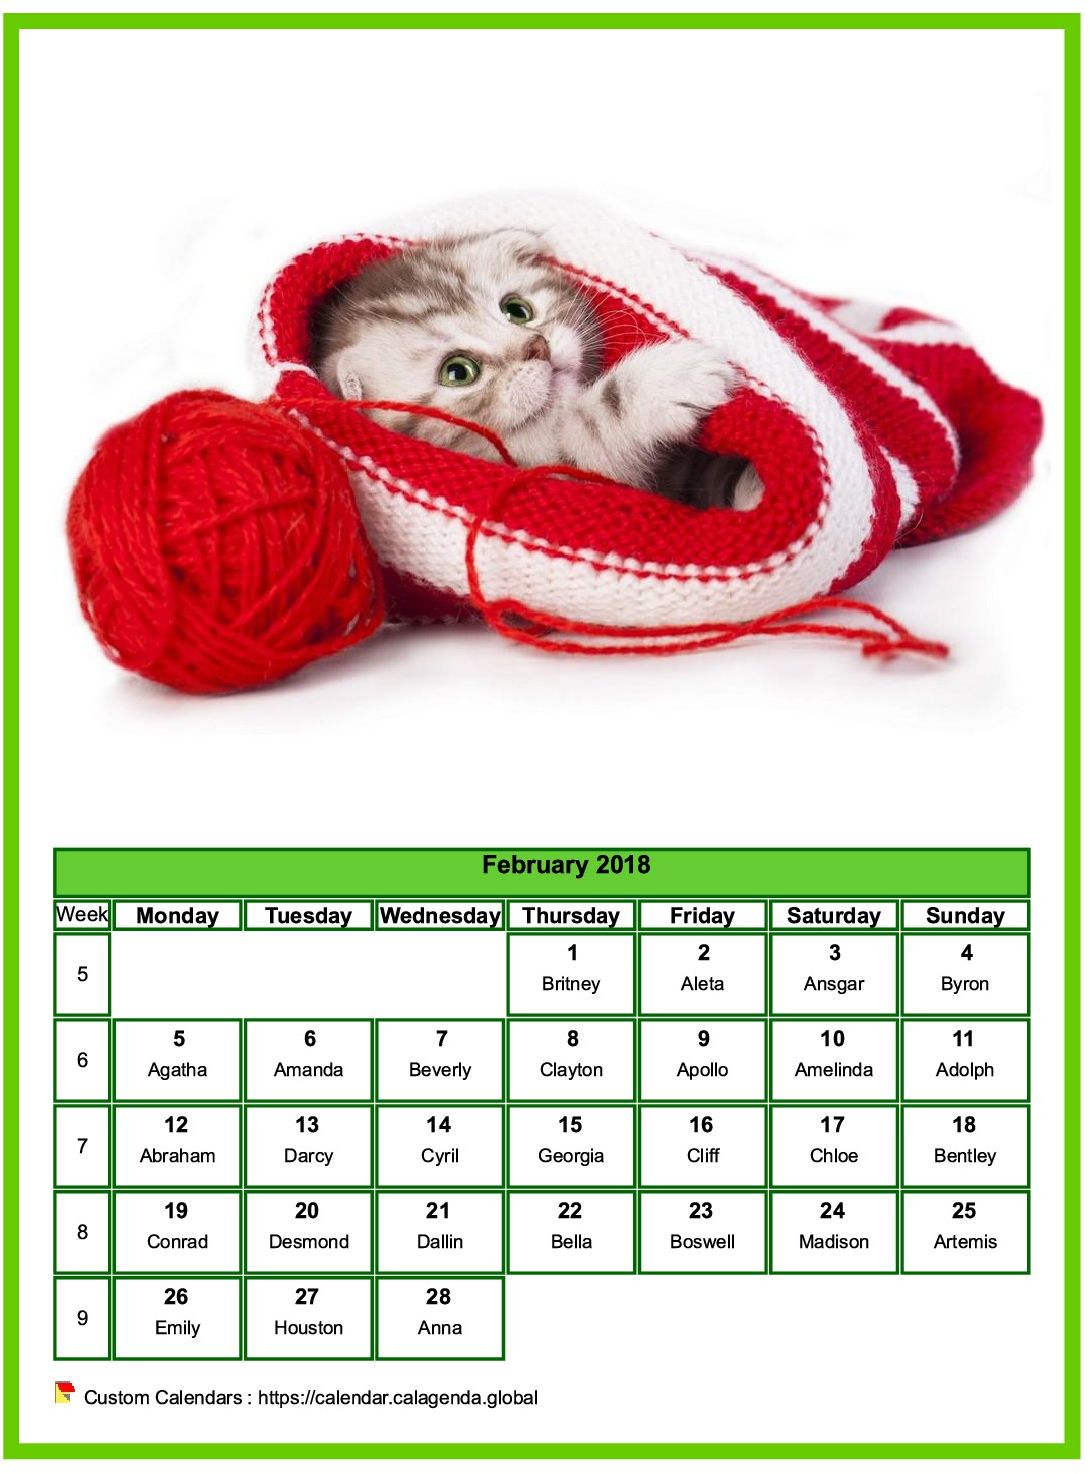 Calendar February 2018 cats